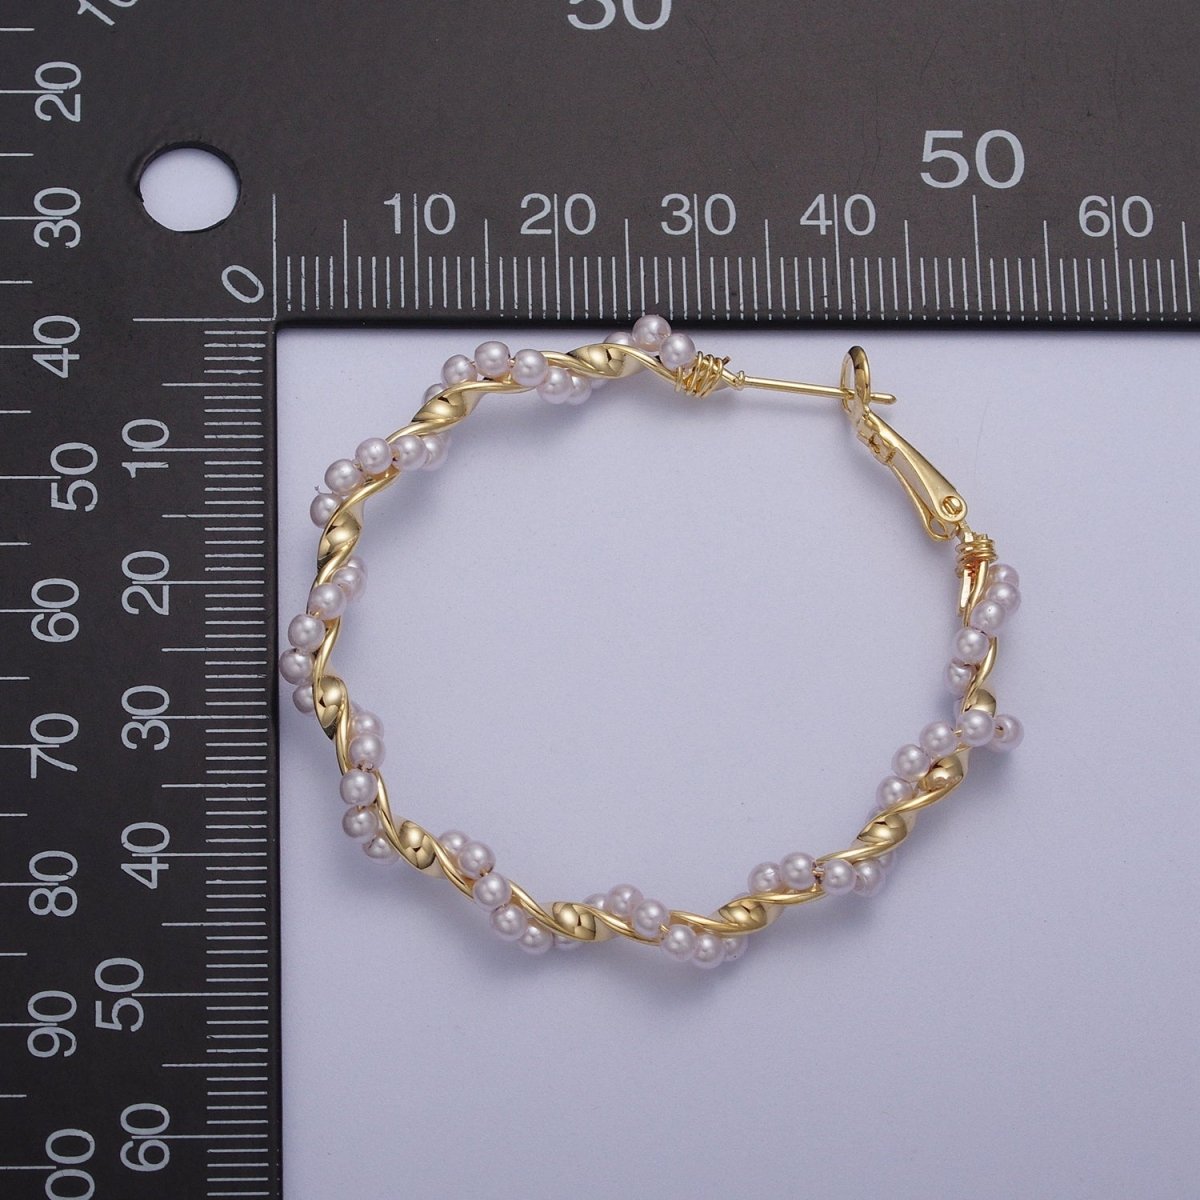 24K Gold Filled Twisted Pearls 50mm Hoops Earrings | Y-231 - DLUXCA